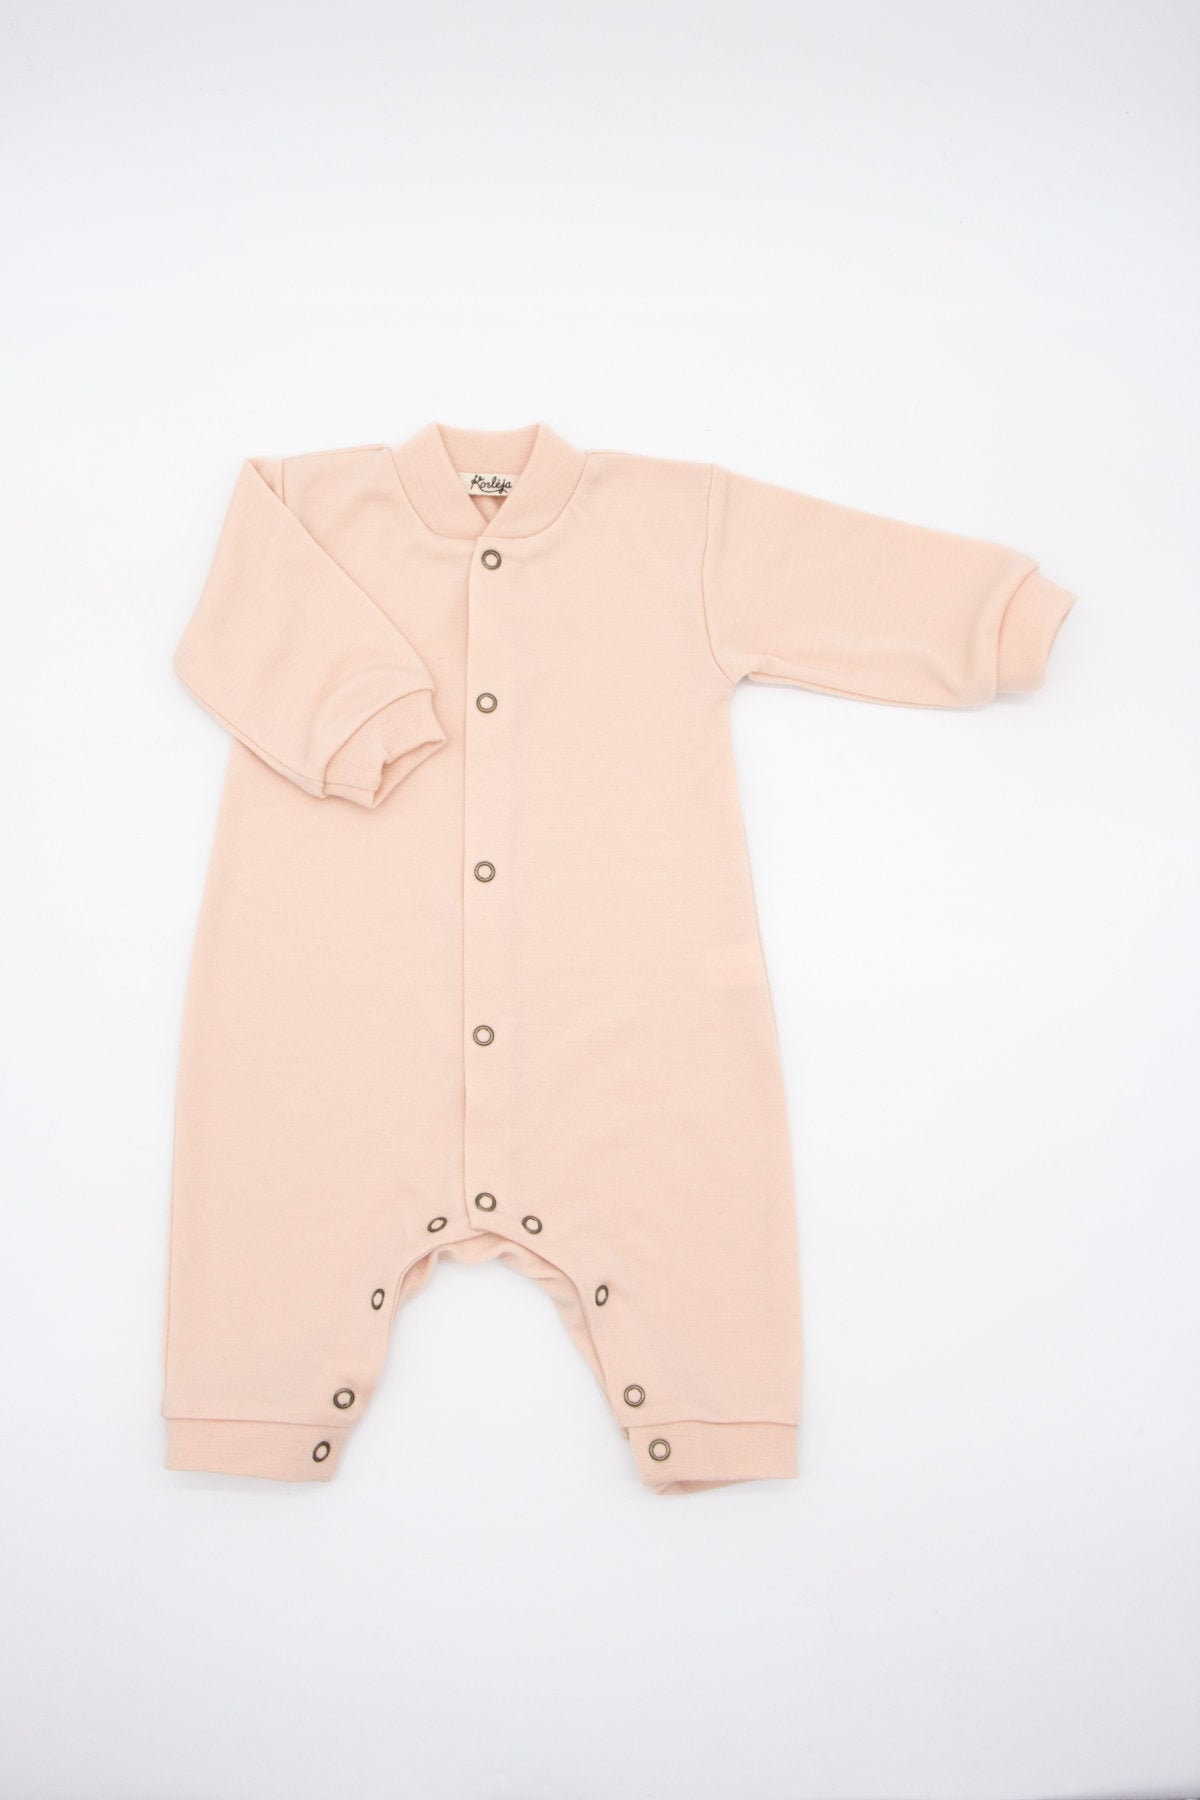 Buy Leafbird Woolen Winter Full Suit Set for Baby Girls and Boys, Warm Woolen  Clothes for Newborn Babies, Sweater Lower Set, Kids Woolen Dress